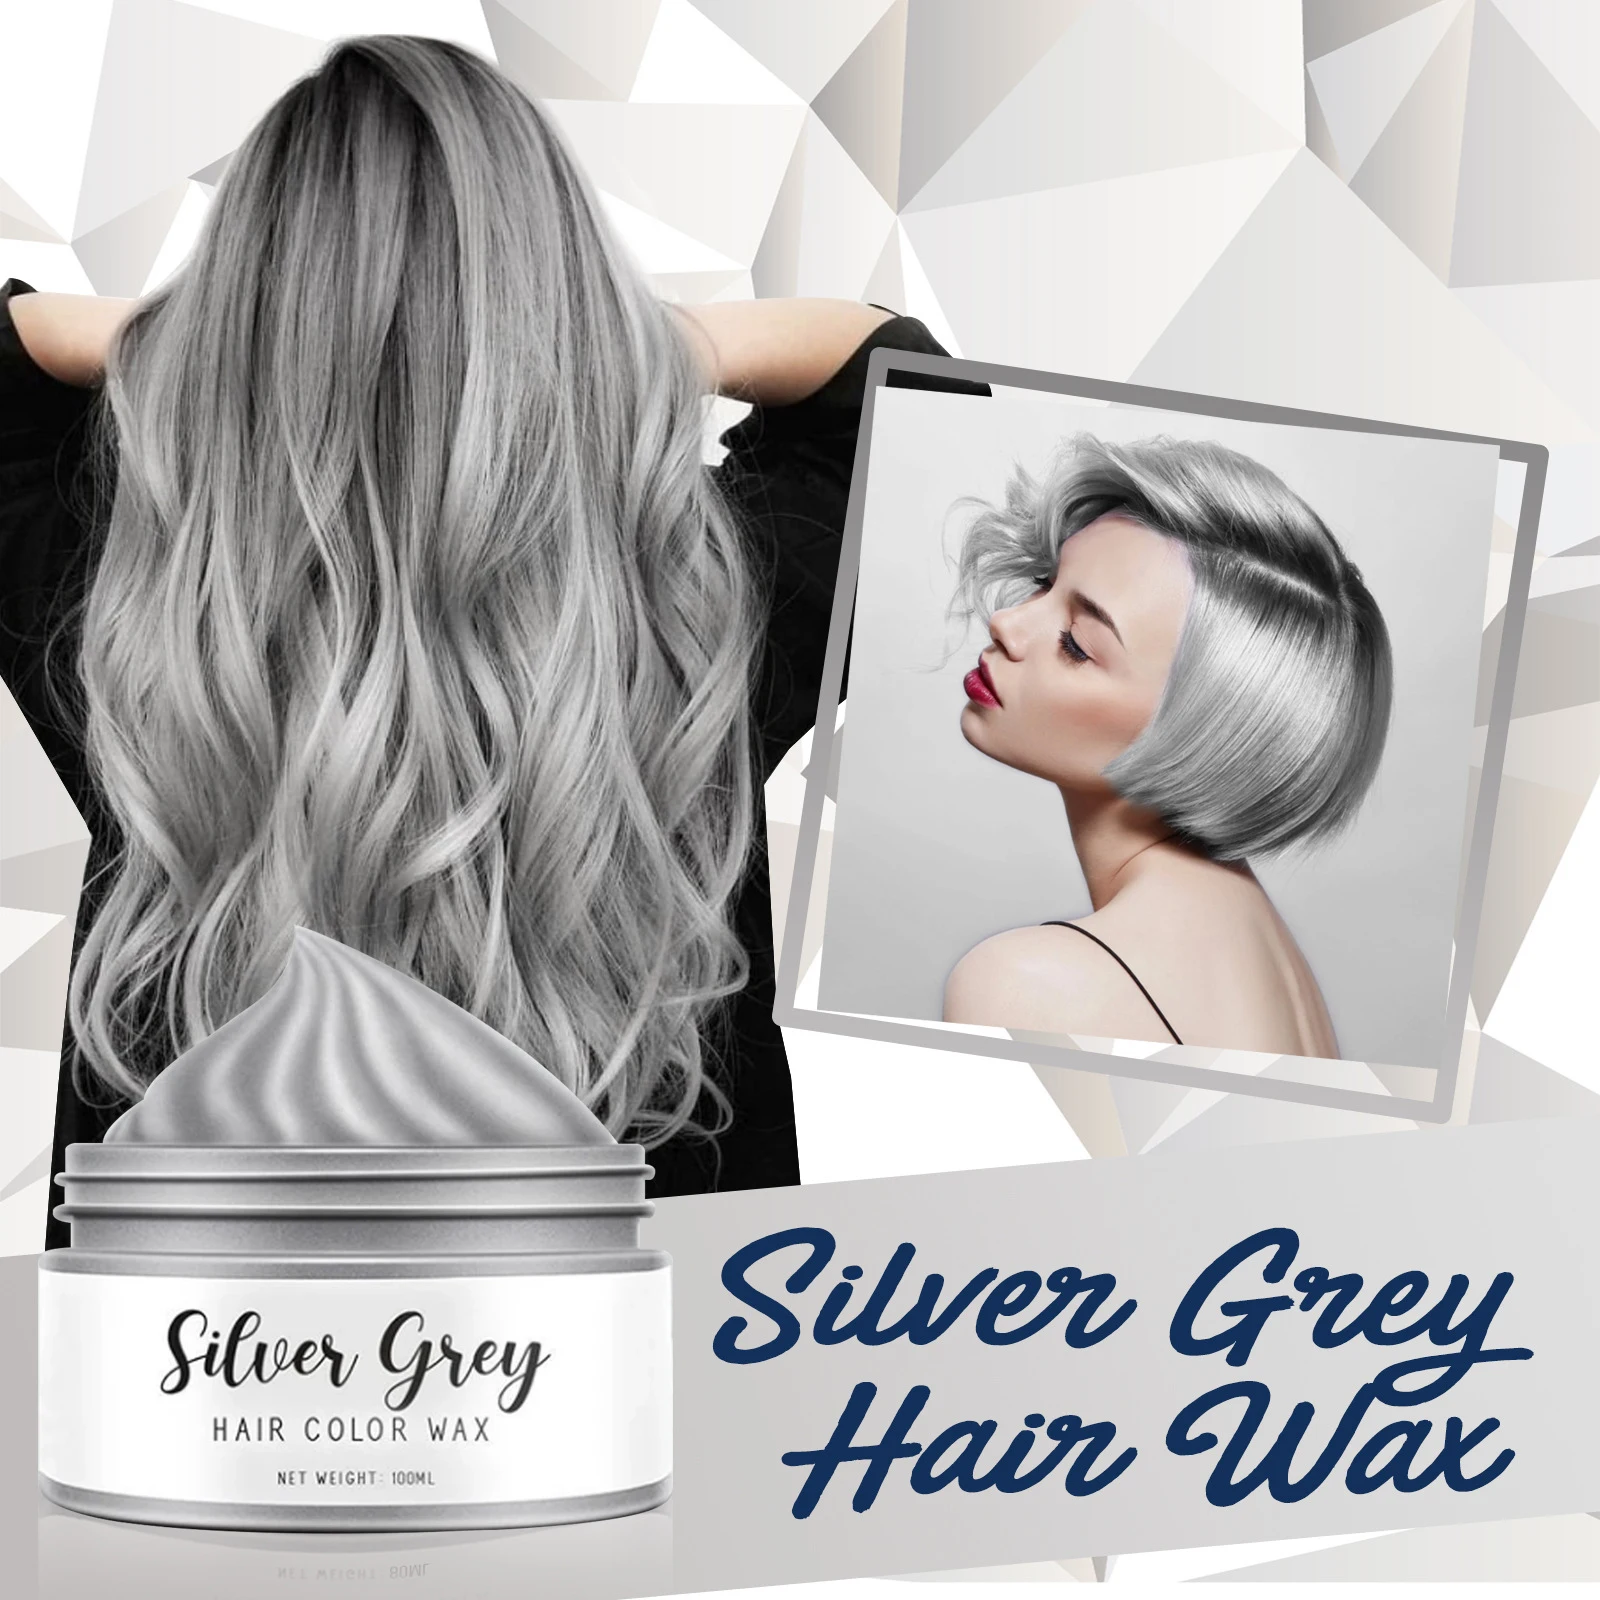 Silver Grey Hair Color Wax Temporary Colors Hair Dye Beauty Care Hair  Styling Wax 1/ Oz